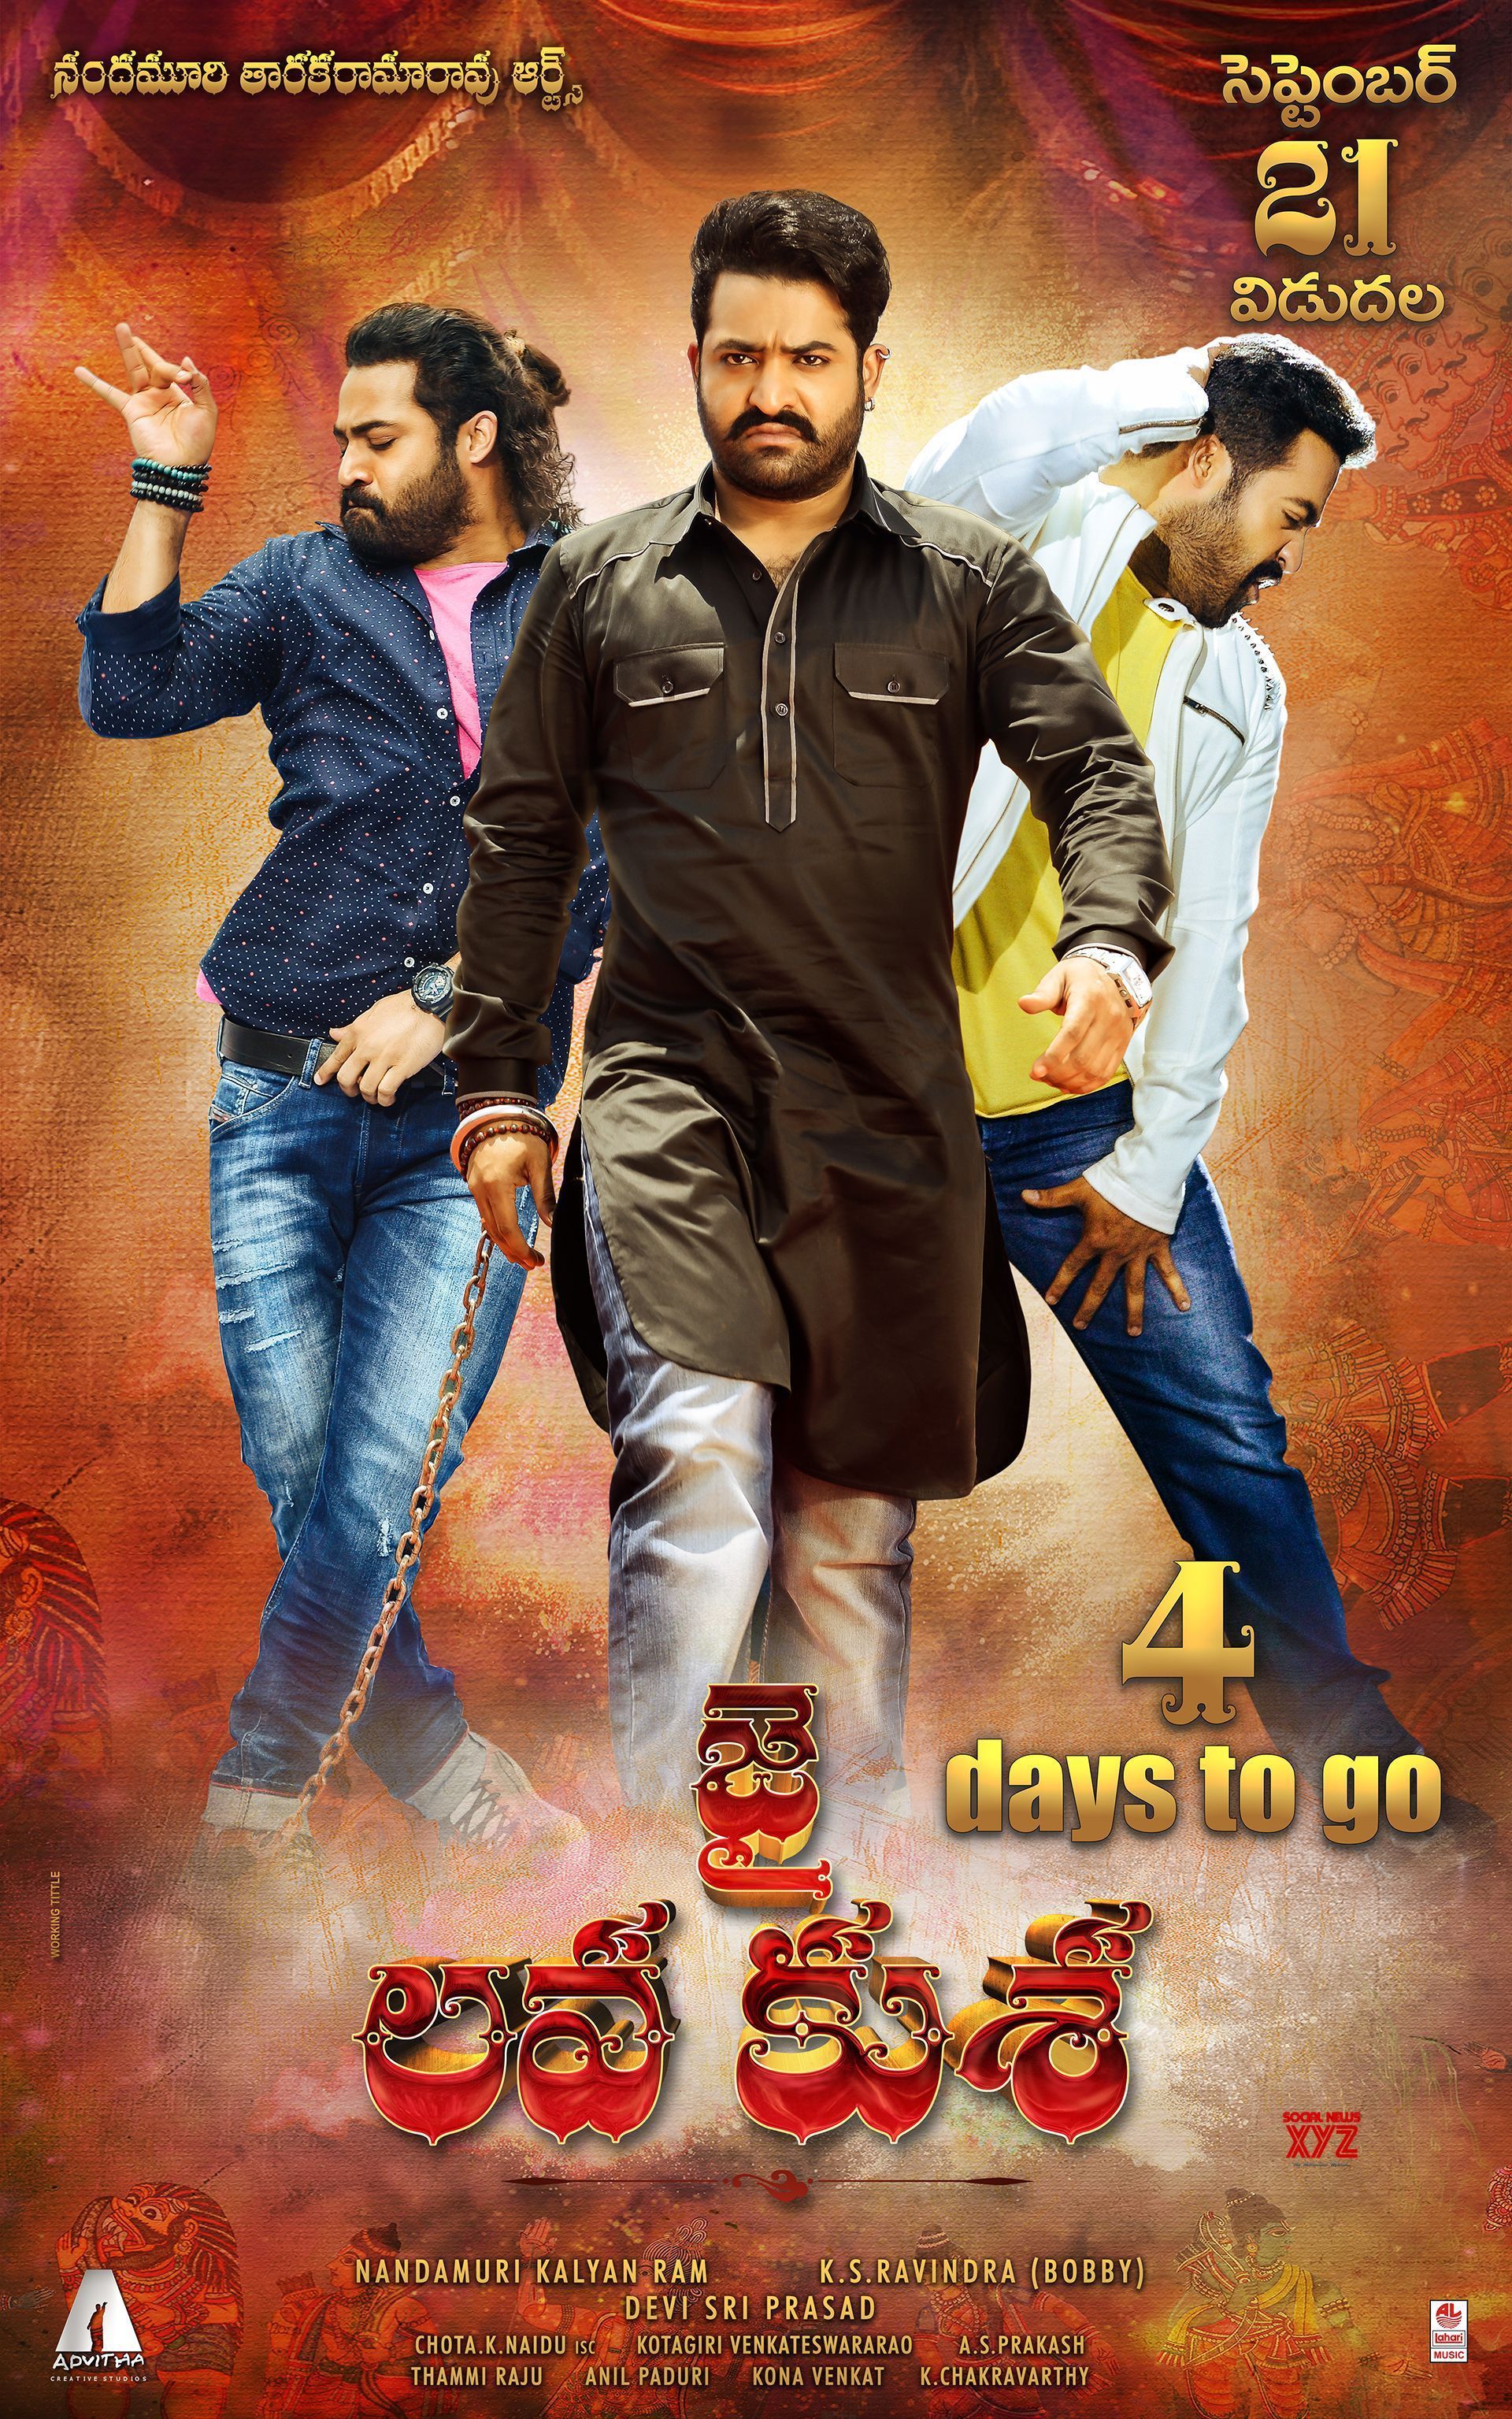 Jai Lava Kusa New Release HD Wallpaper. Telugu movies download, HD movies download, Full movies